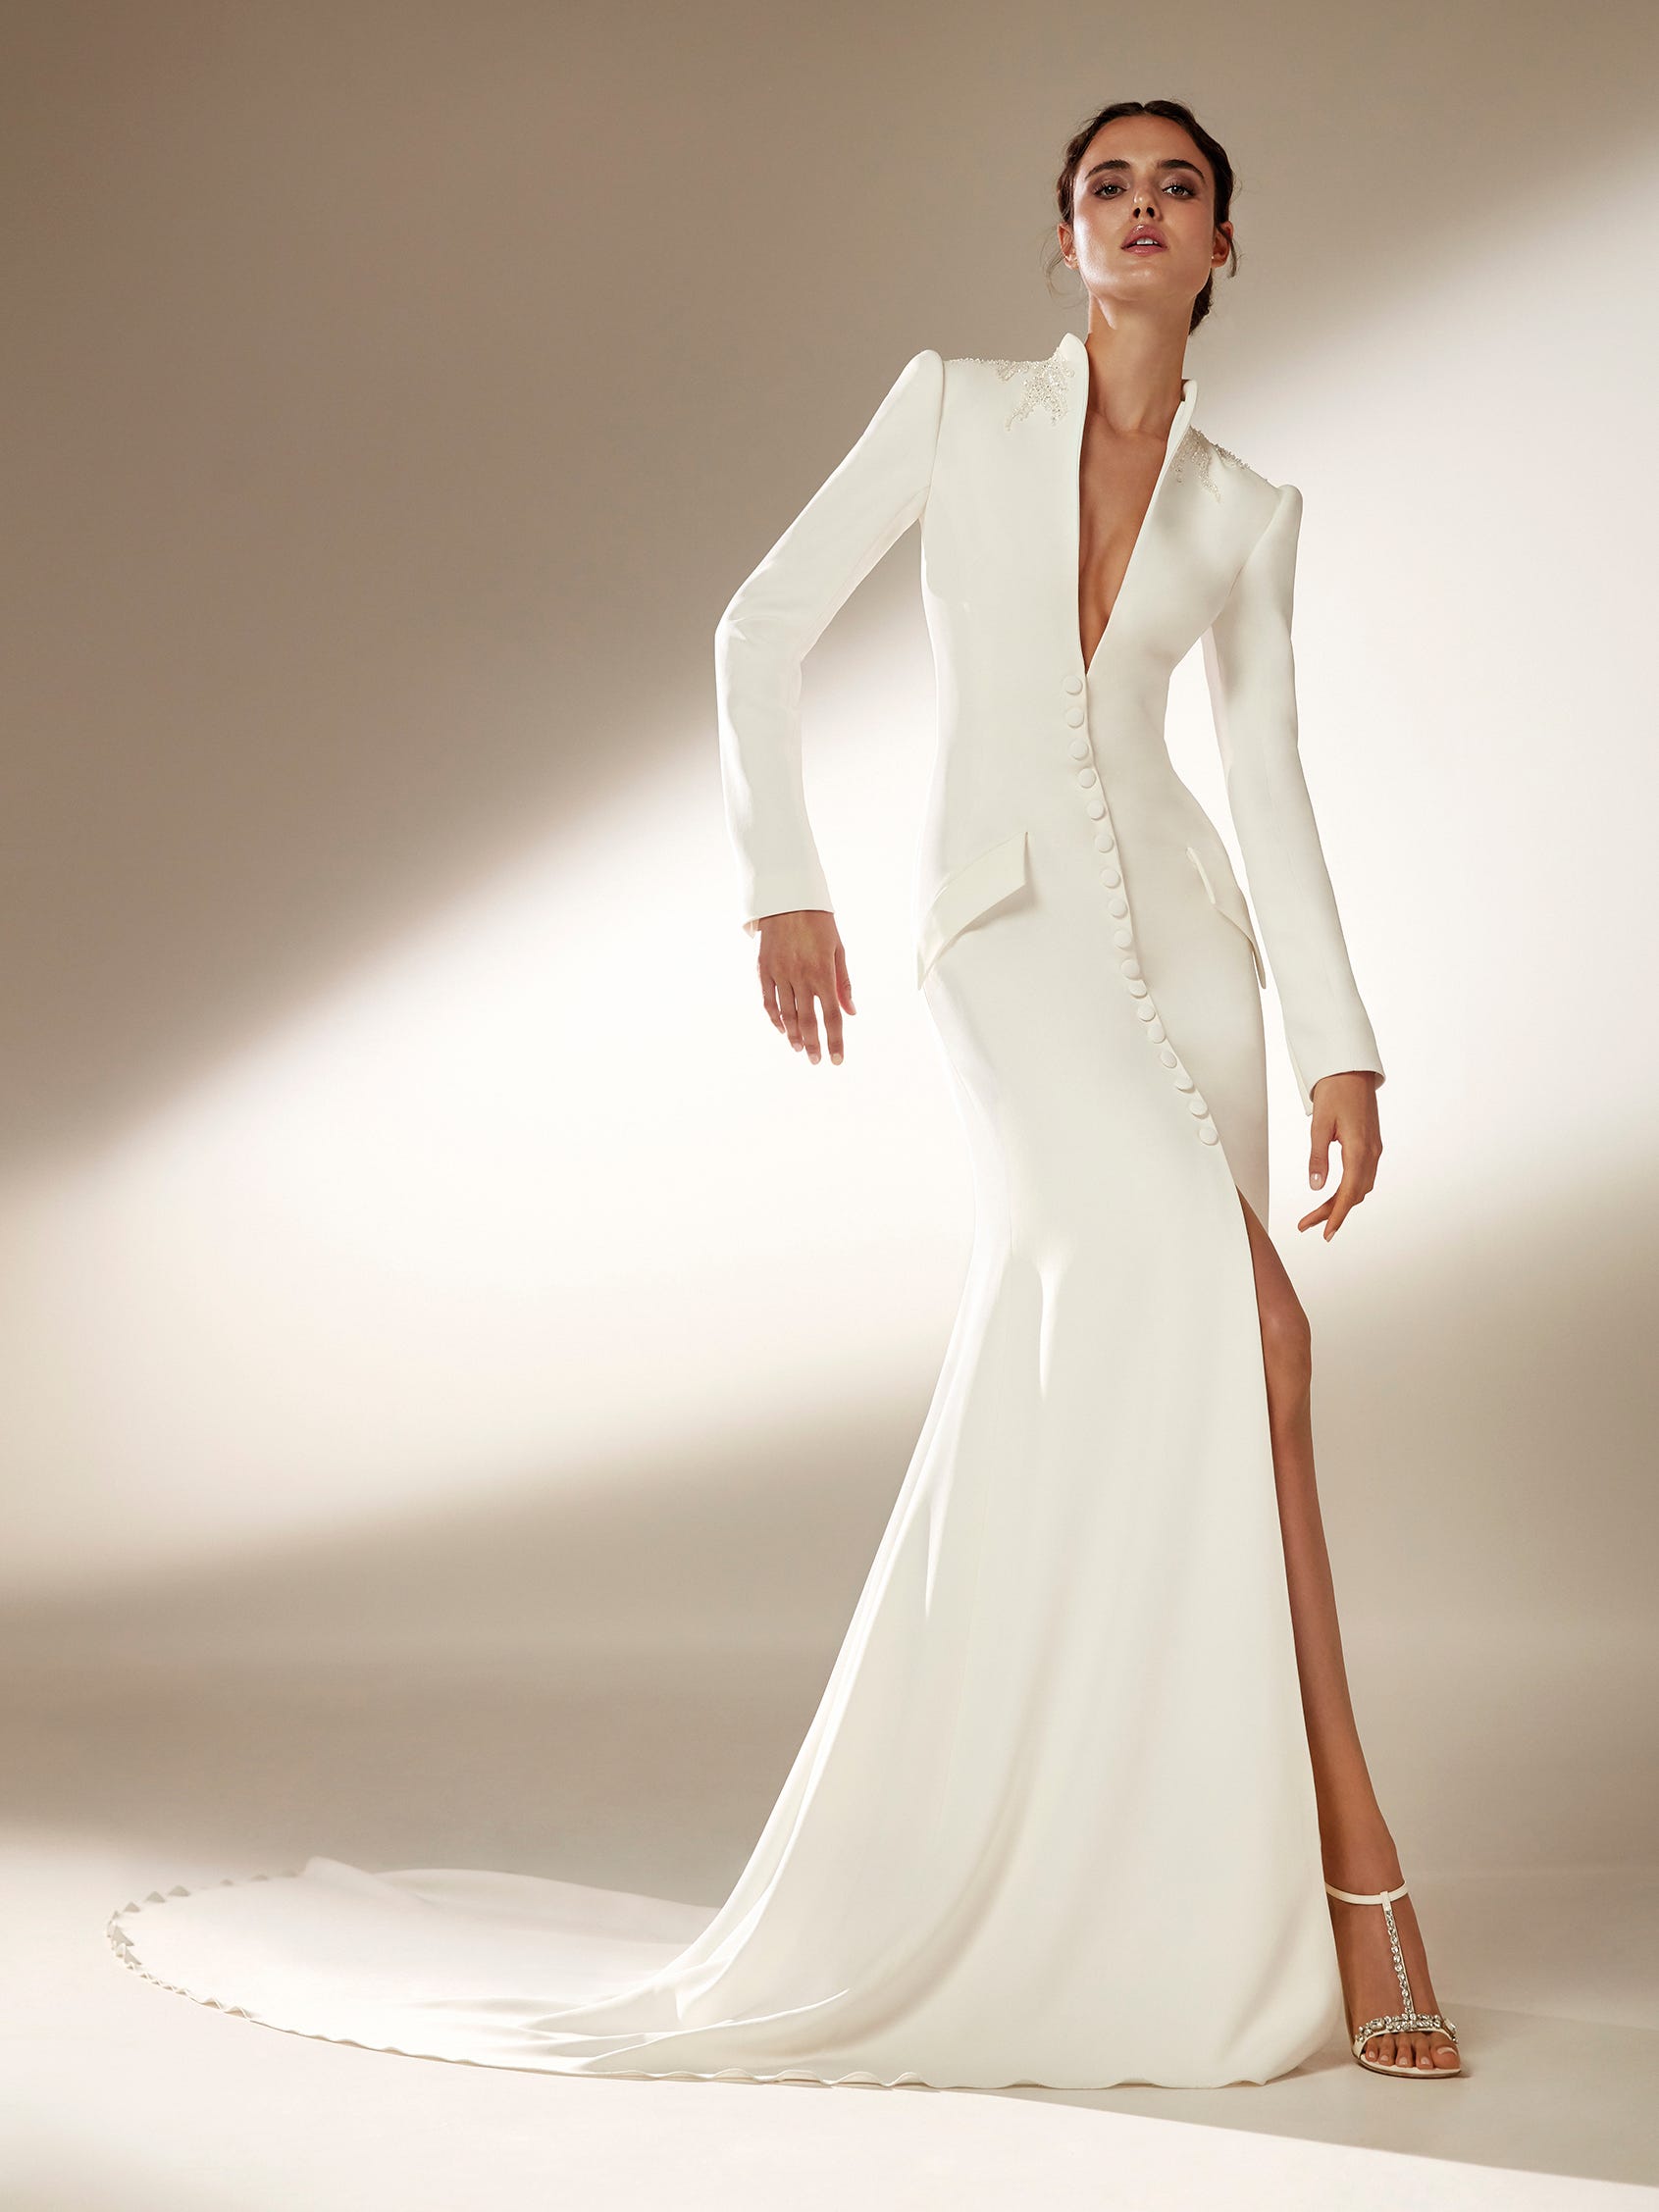 Stunning Civil Wedding Dress Picks For Your Courthouse Nuptials - Lulus.com  Fashion Blog